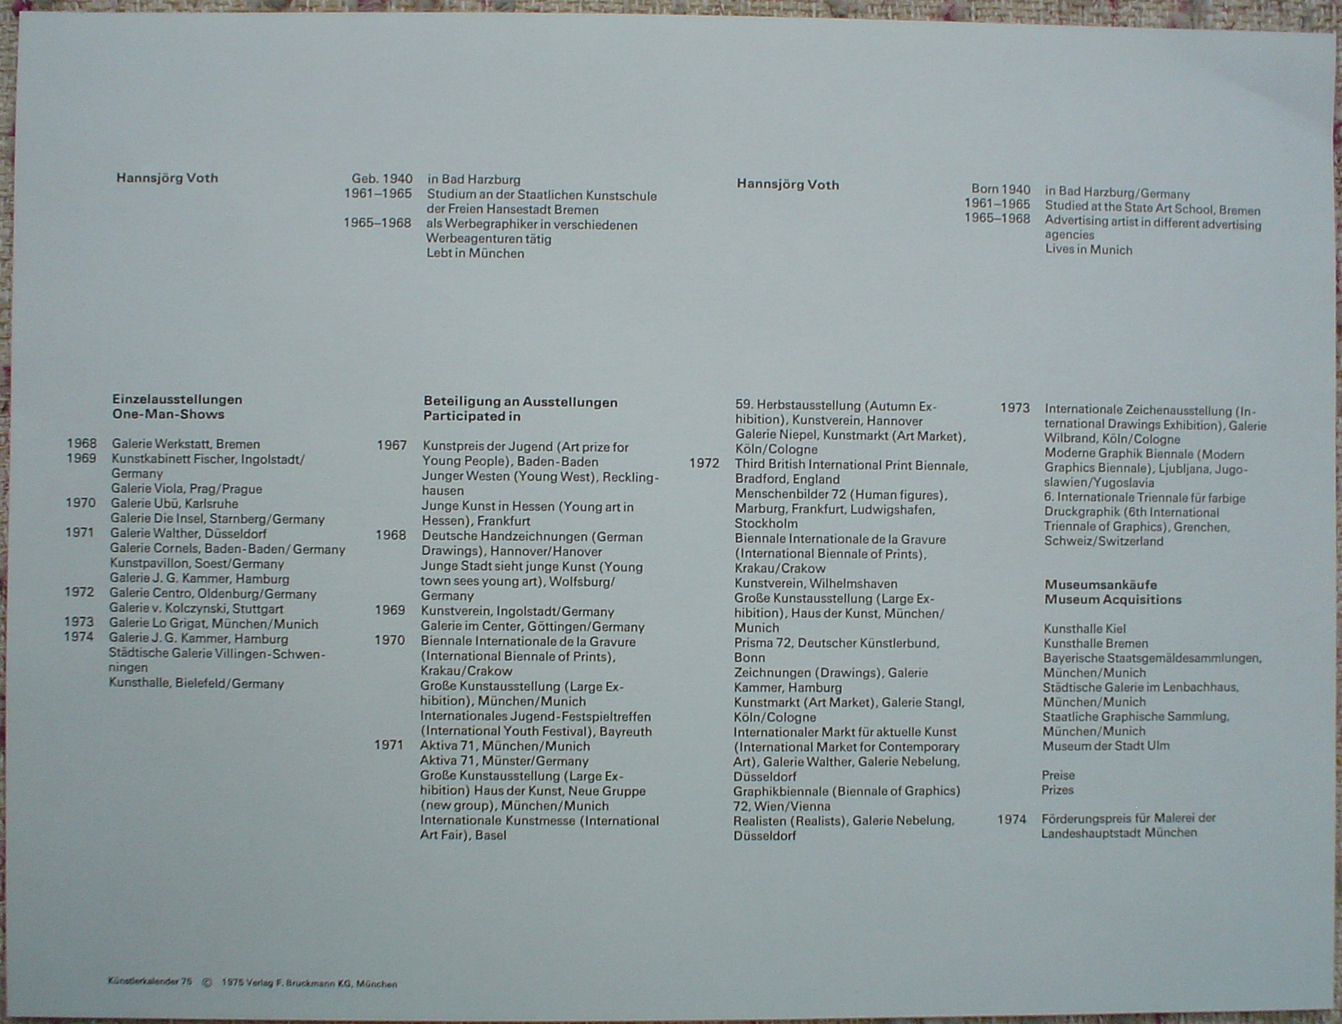 Gray Stitched Shape Abstract (untitled) by Hannsjörg Voth, to show accompanying Artist Biography - from "Künstlerkalendar '75" , an oversized calendar featuring original serigraphs from 13 European artists, © 1975 Verlag F. Bruckmann KG, München (Bruckmann Publishing, Munich)